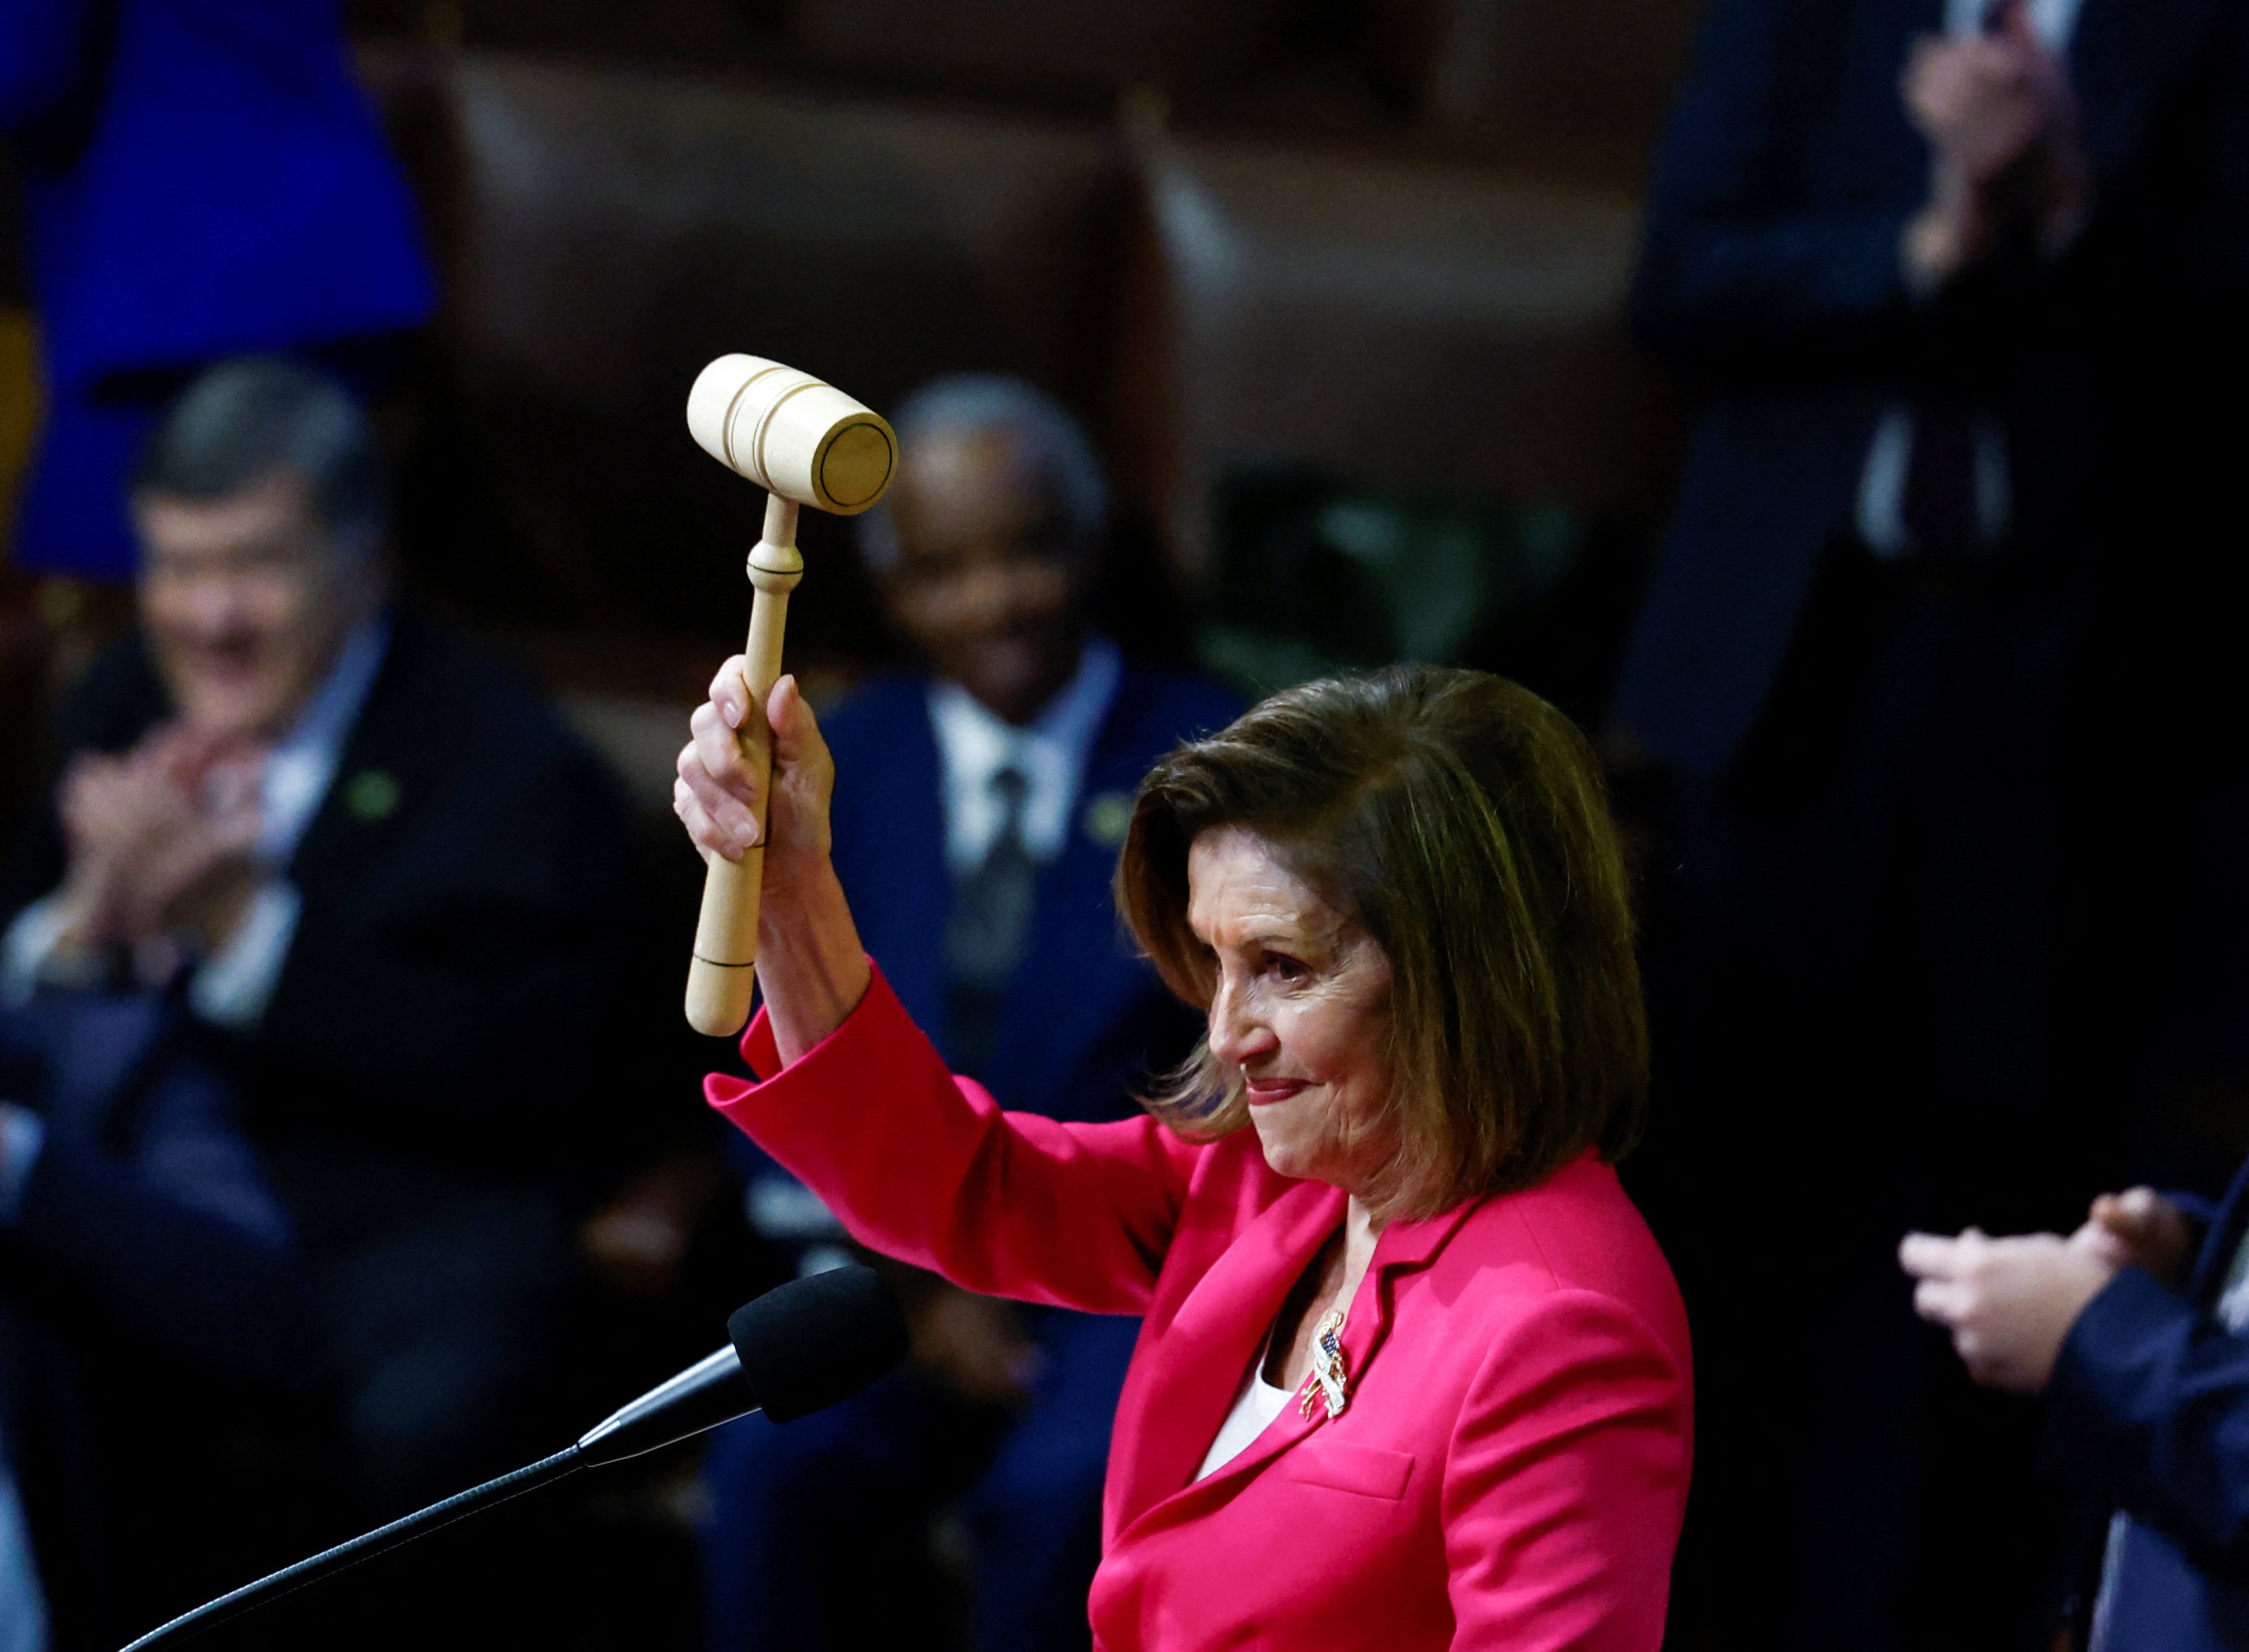 Nancy Pelosi, wearing a bright pink blazer, lifts a gavel high in the air